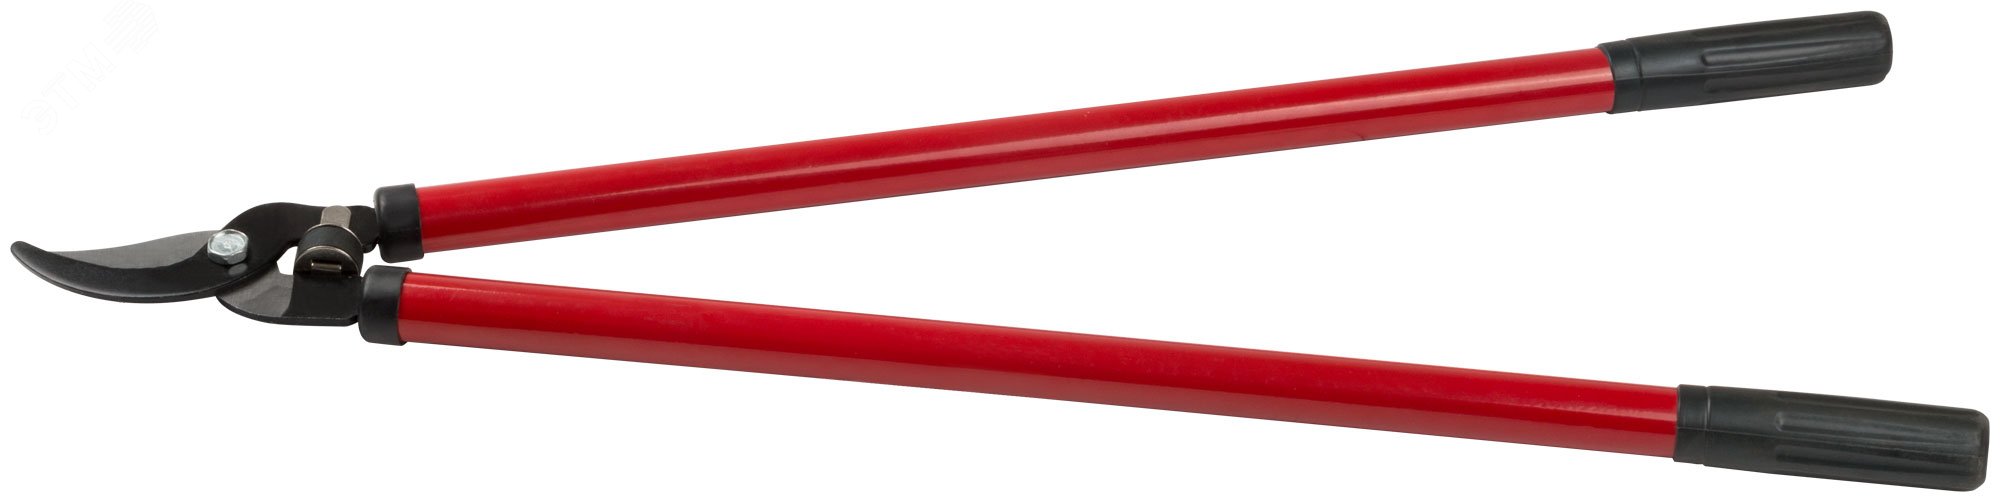 Сучкорез, лезвия 70 мм, металлические ручки с ПВХ рукоятками 700 мм 76295 КУРС - превью 4